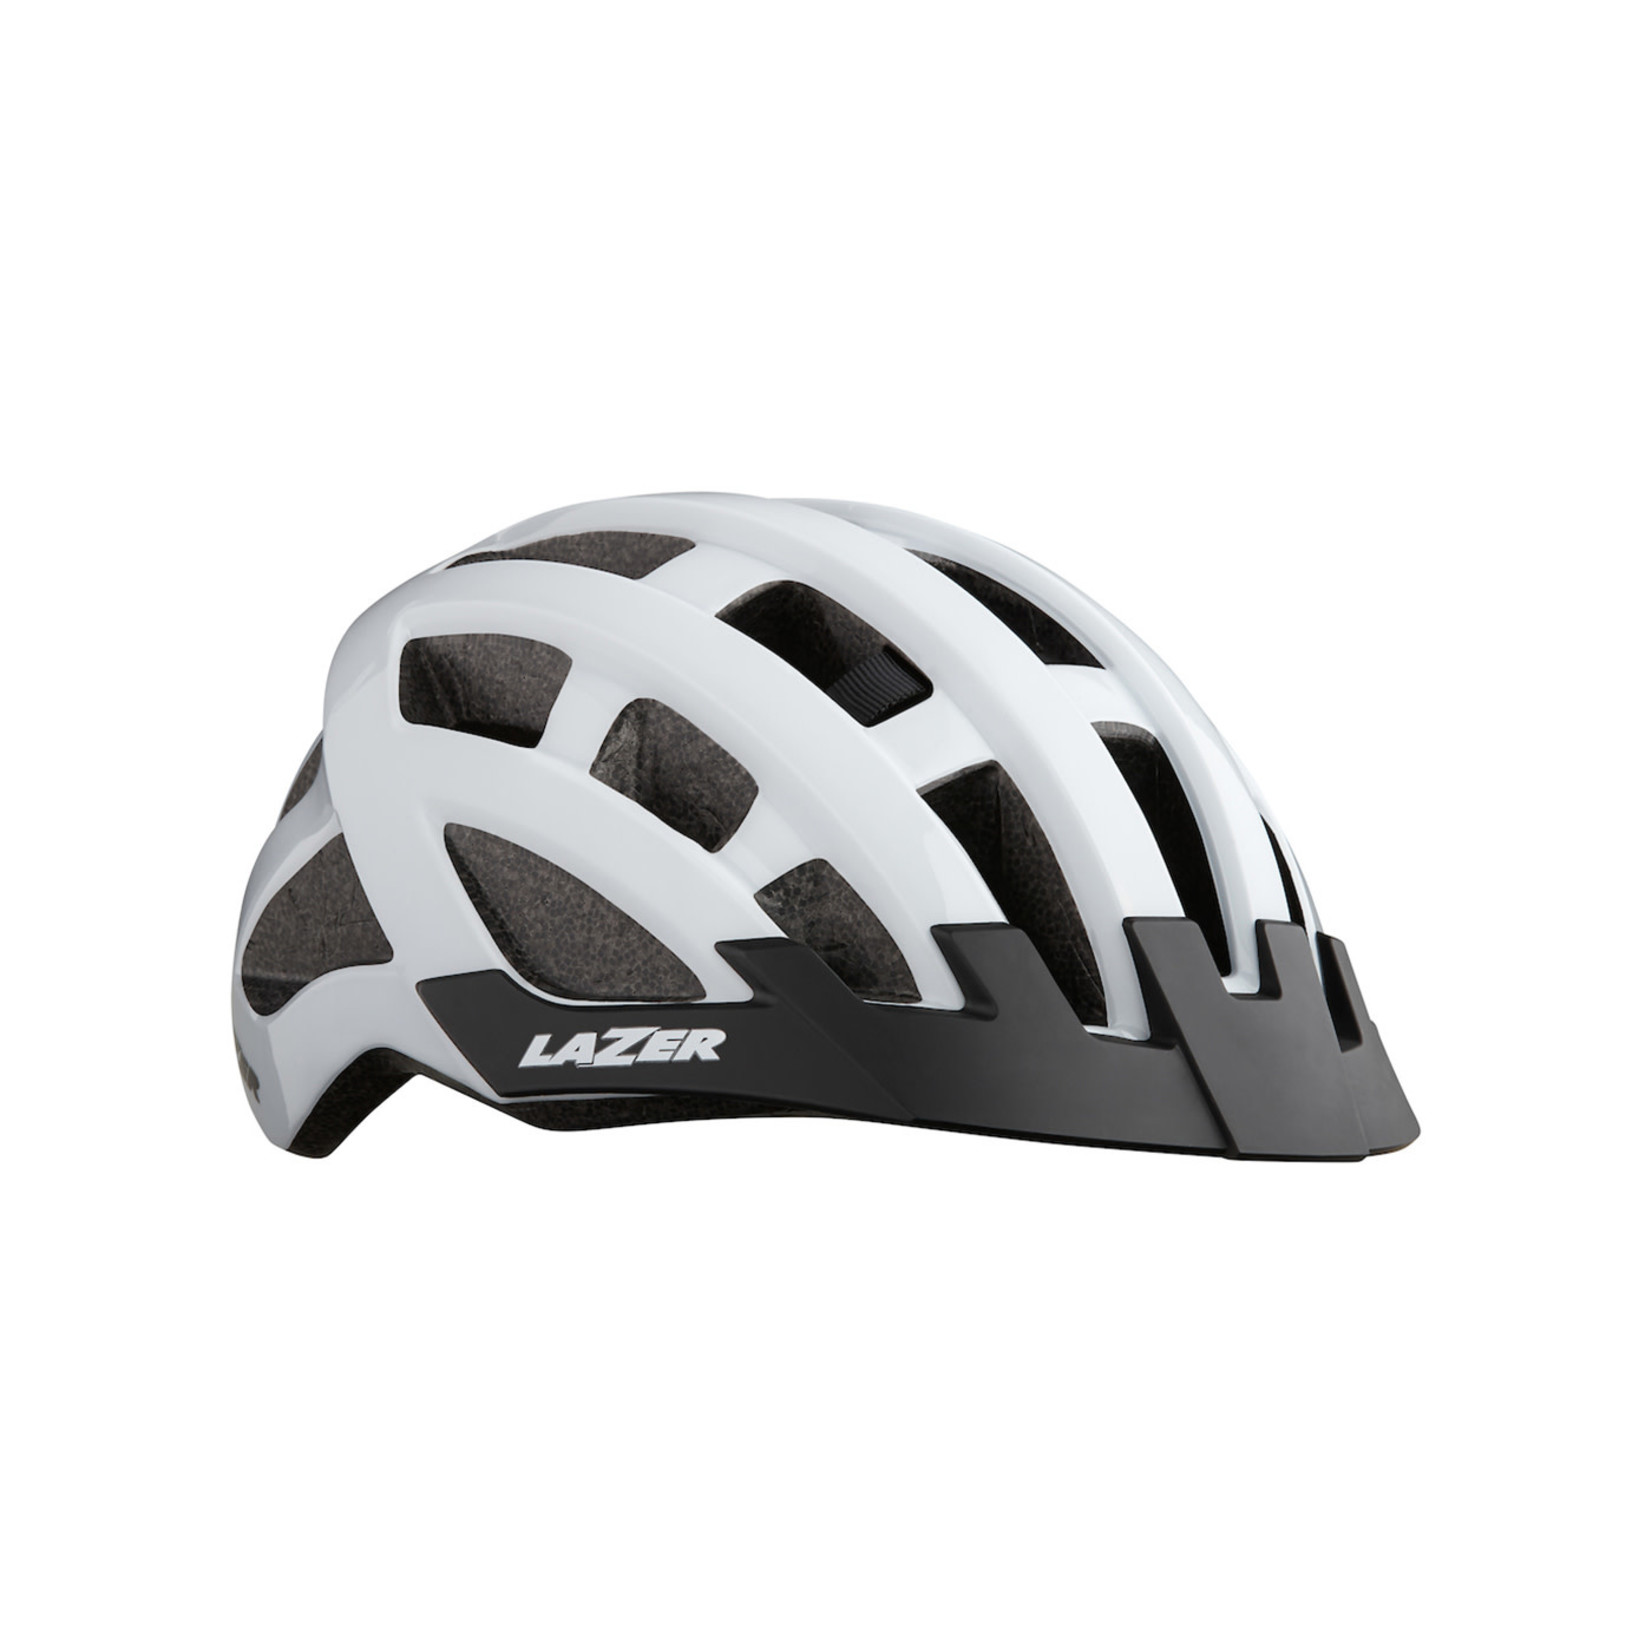 LAZER Lazer Compact Helmet